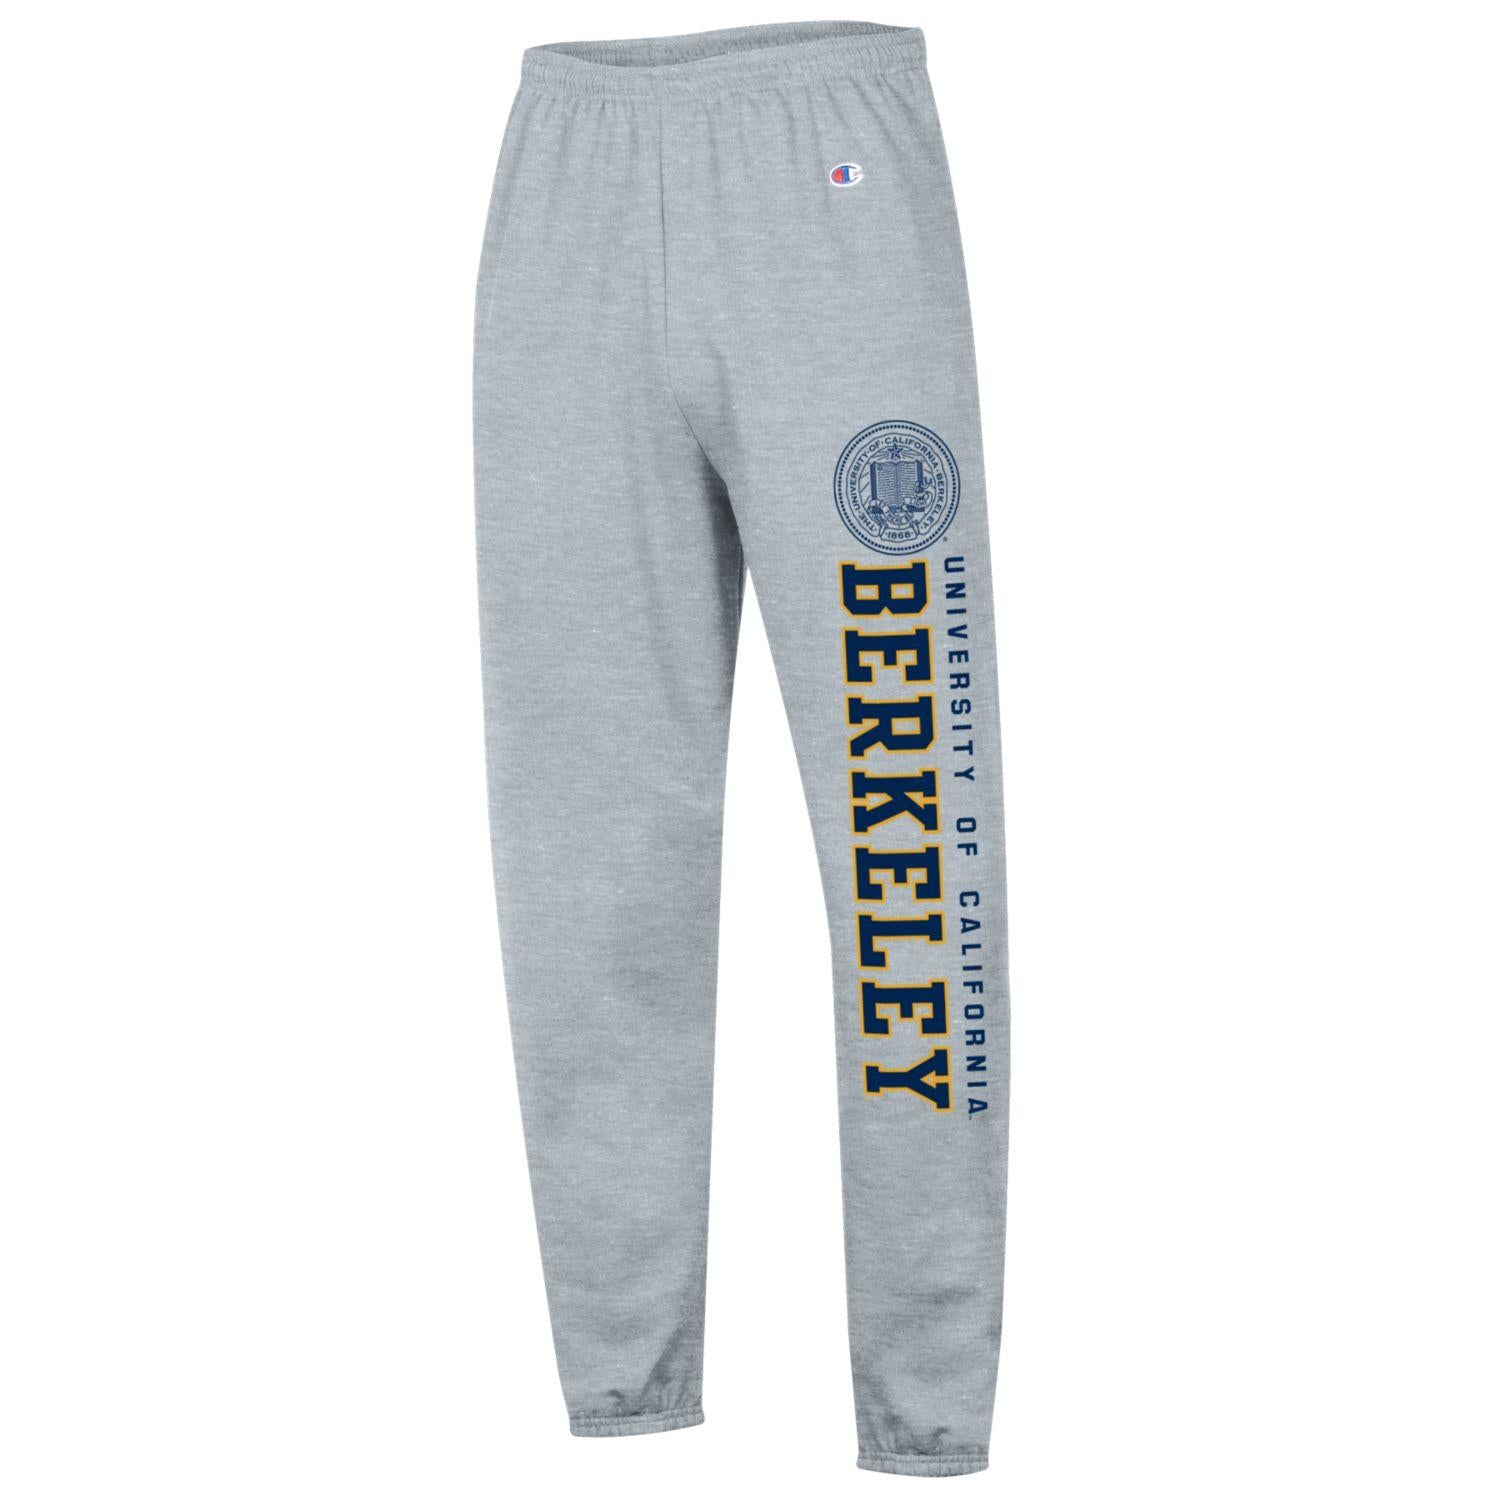 University of California Berkeley and seal Champion men's sweatpants-Grey-Shop College Wear